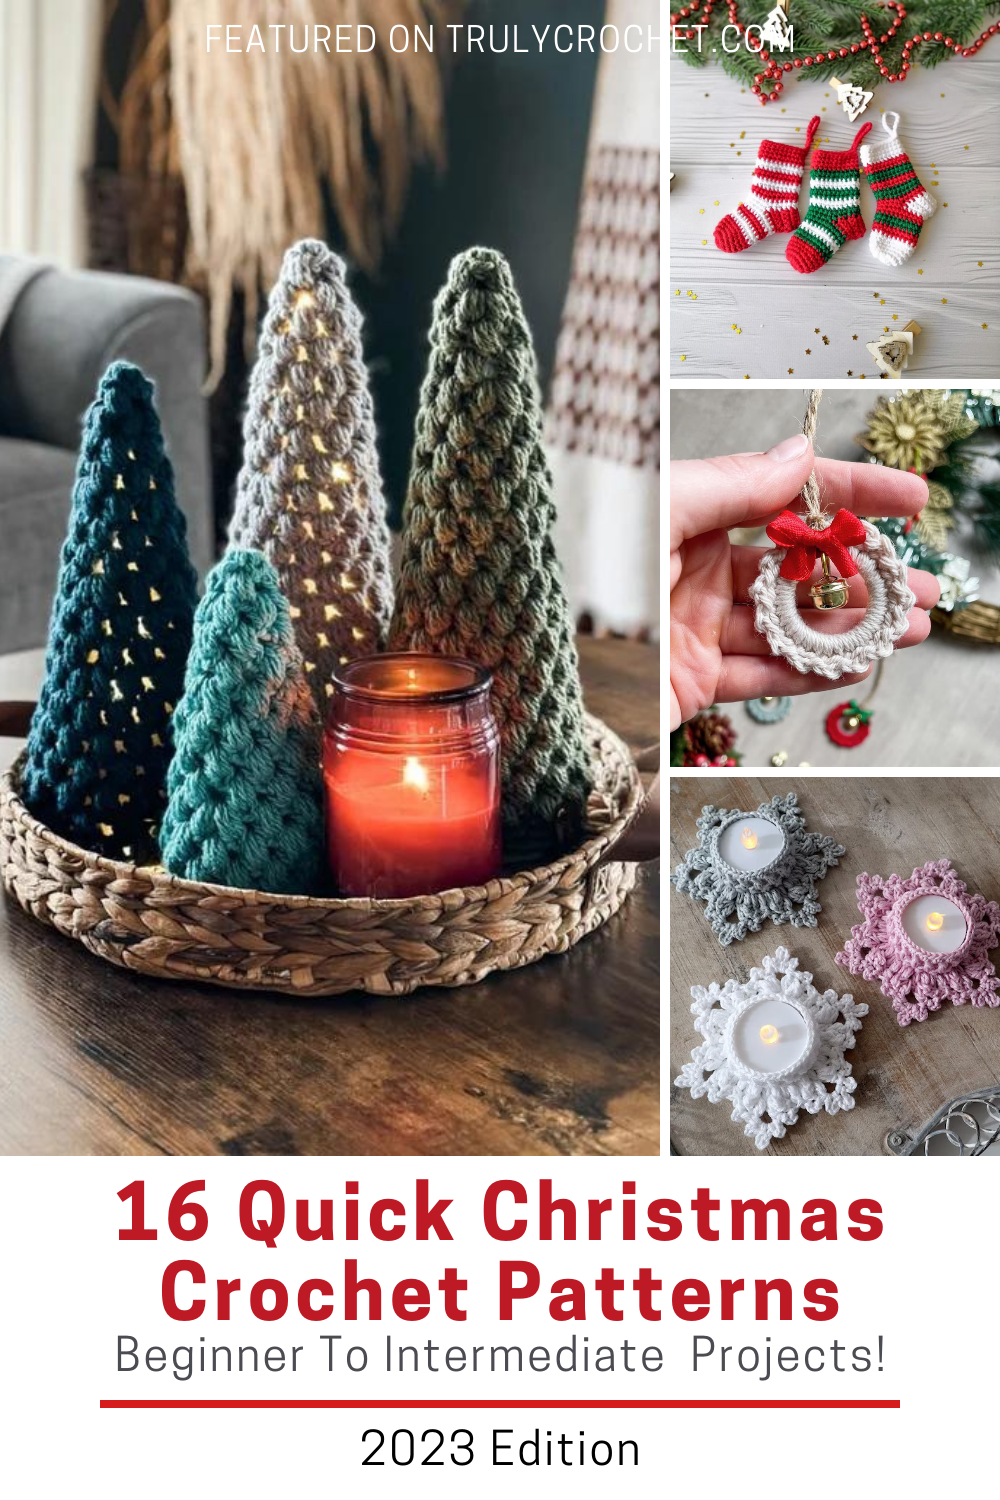 16 quick christmas crochet patterns - 2023 edition